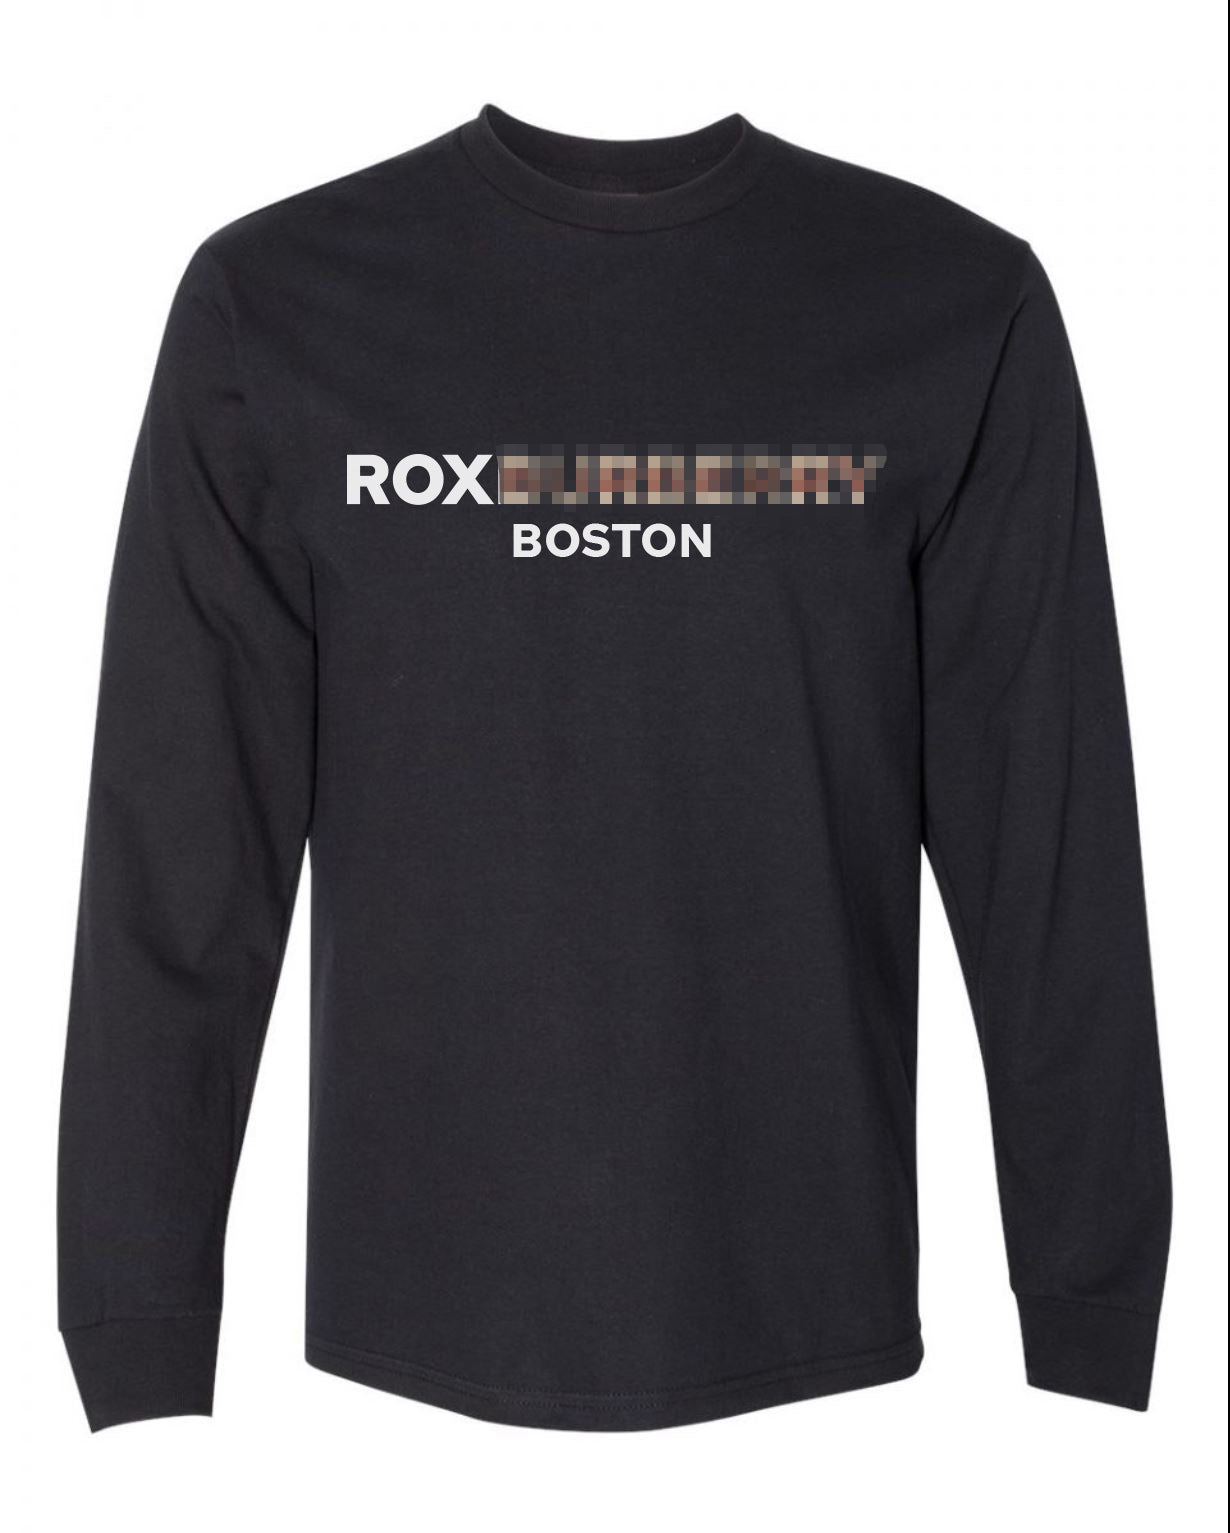 Roxburberry - Long Sleeve